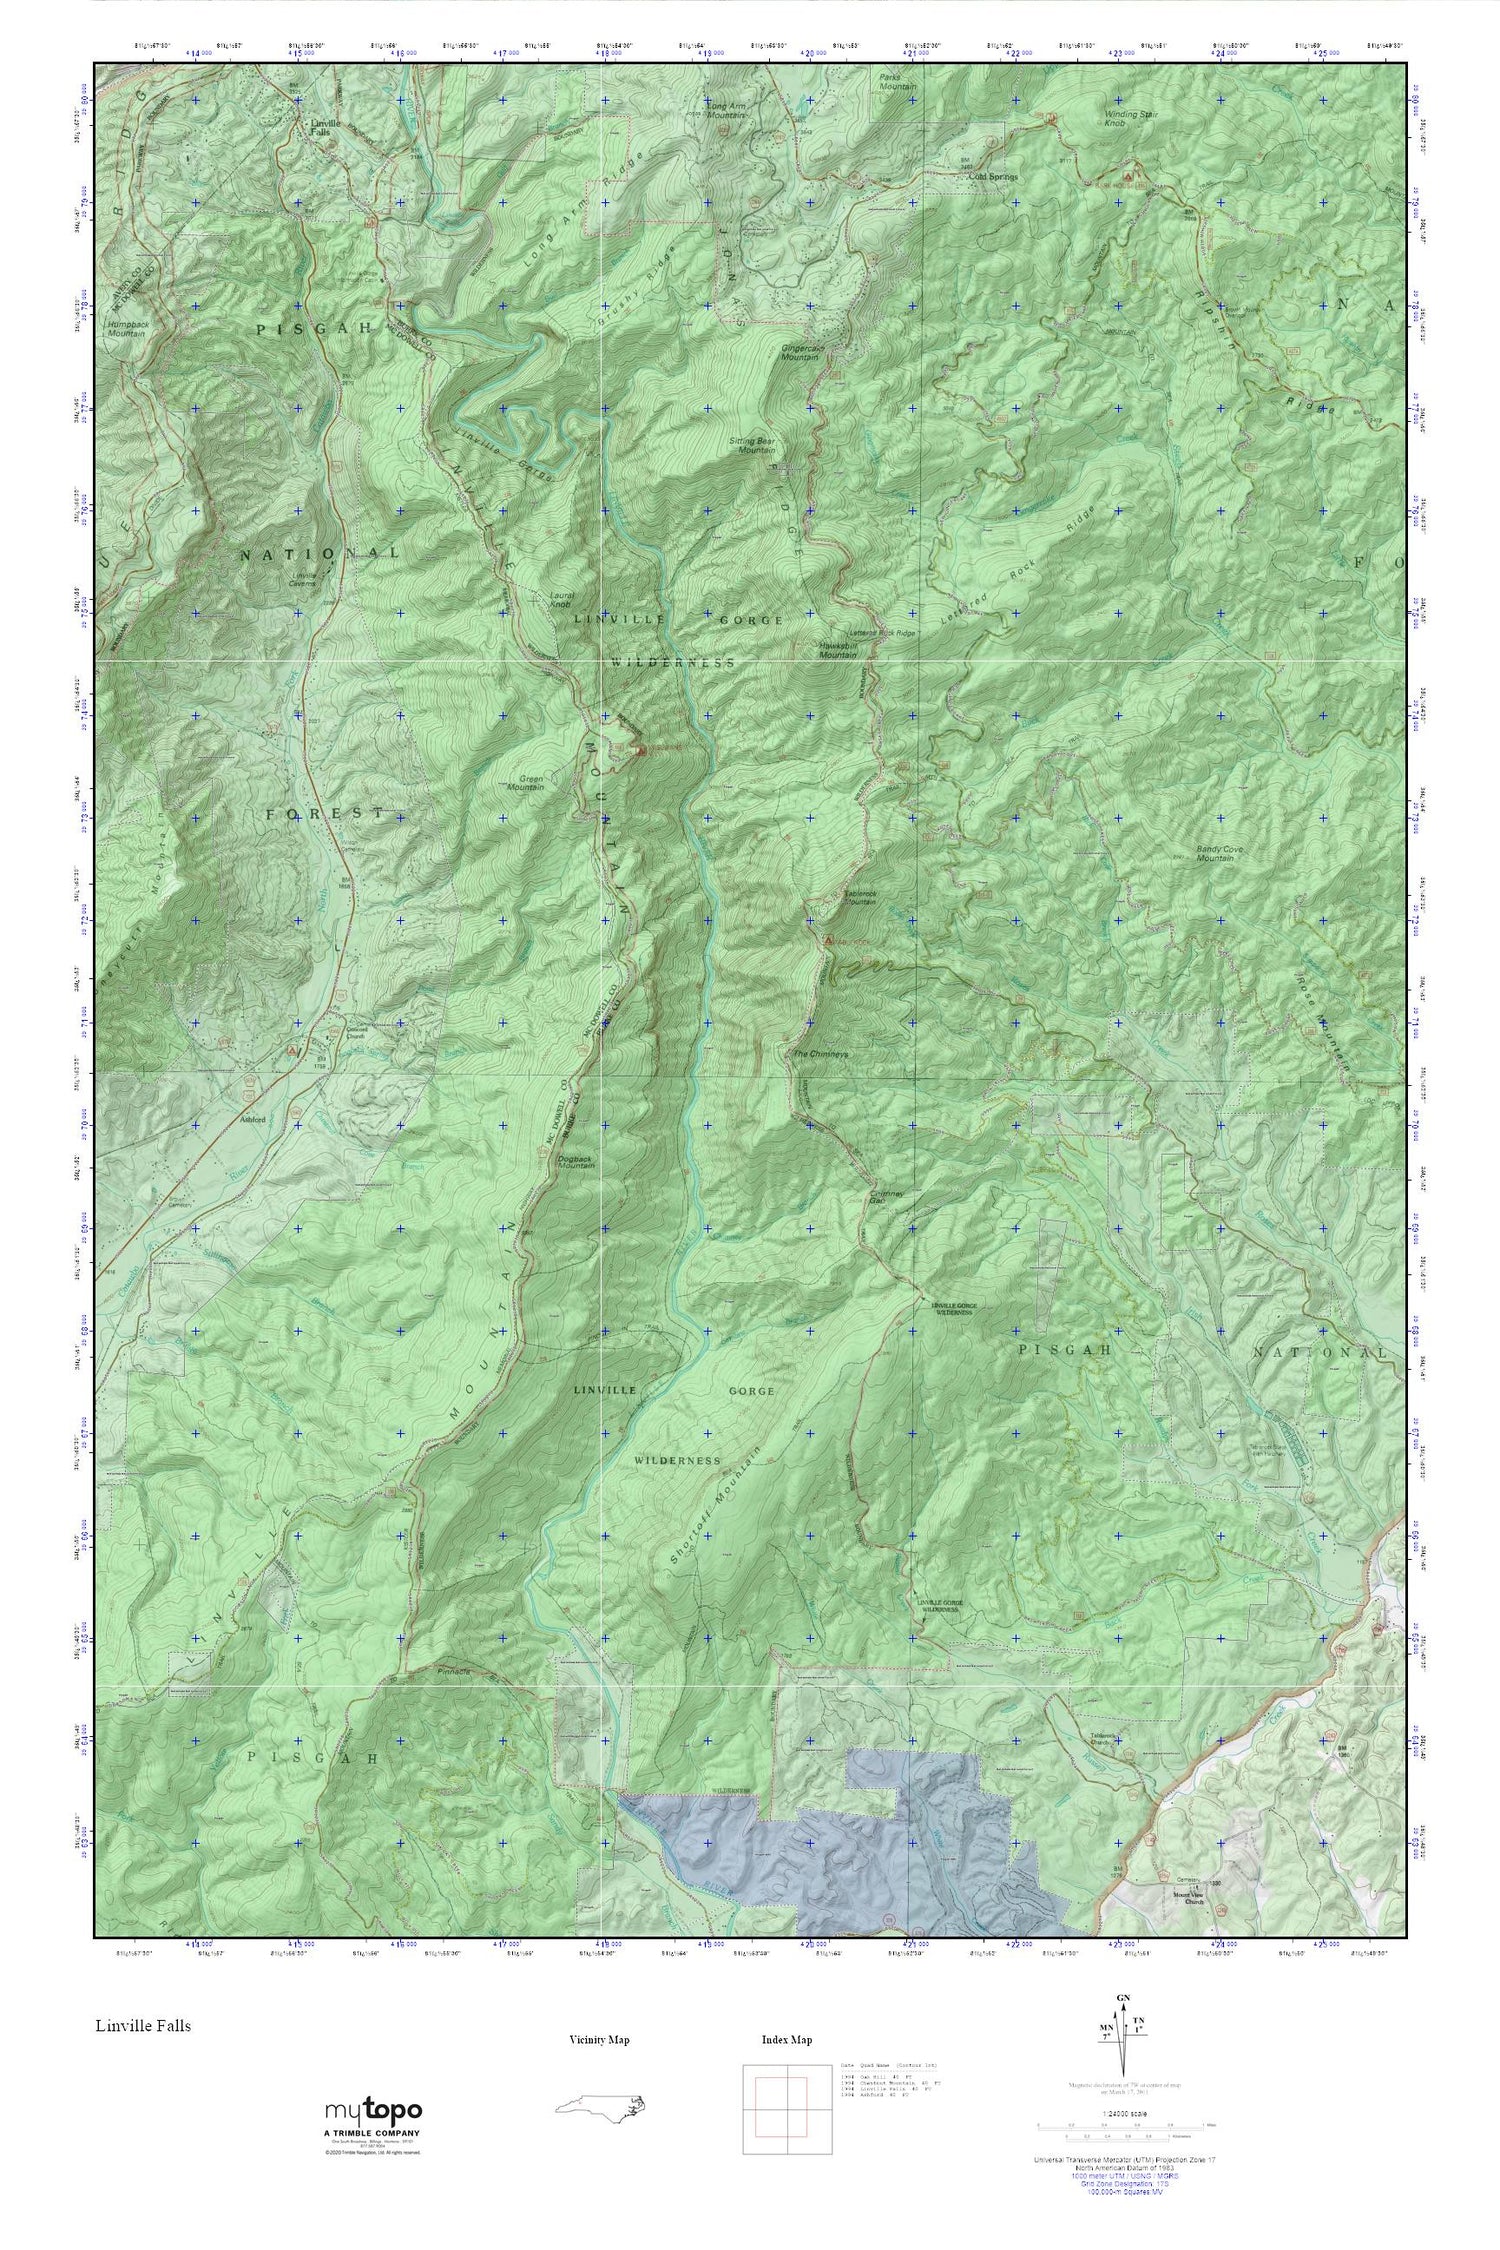 Linville Gorge MyTopo Explorer Series Map Image